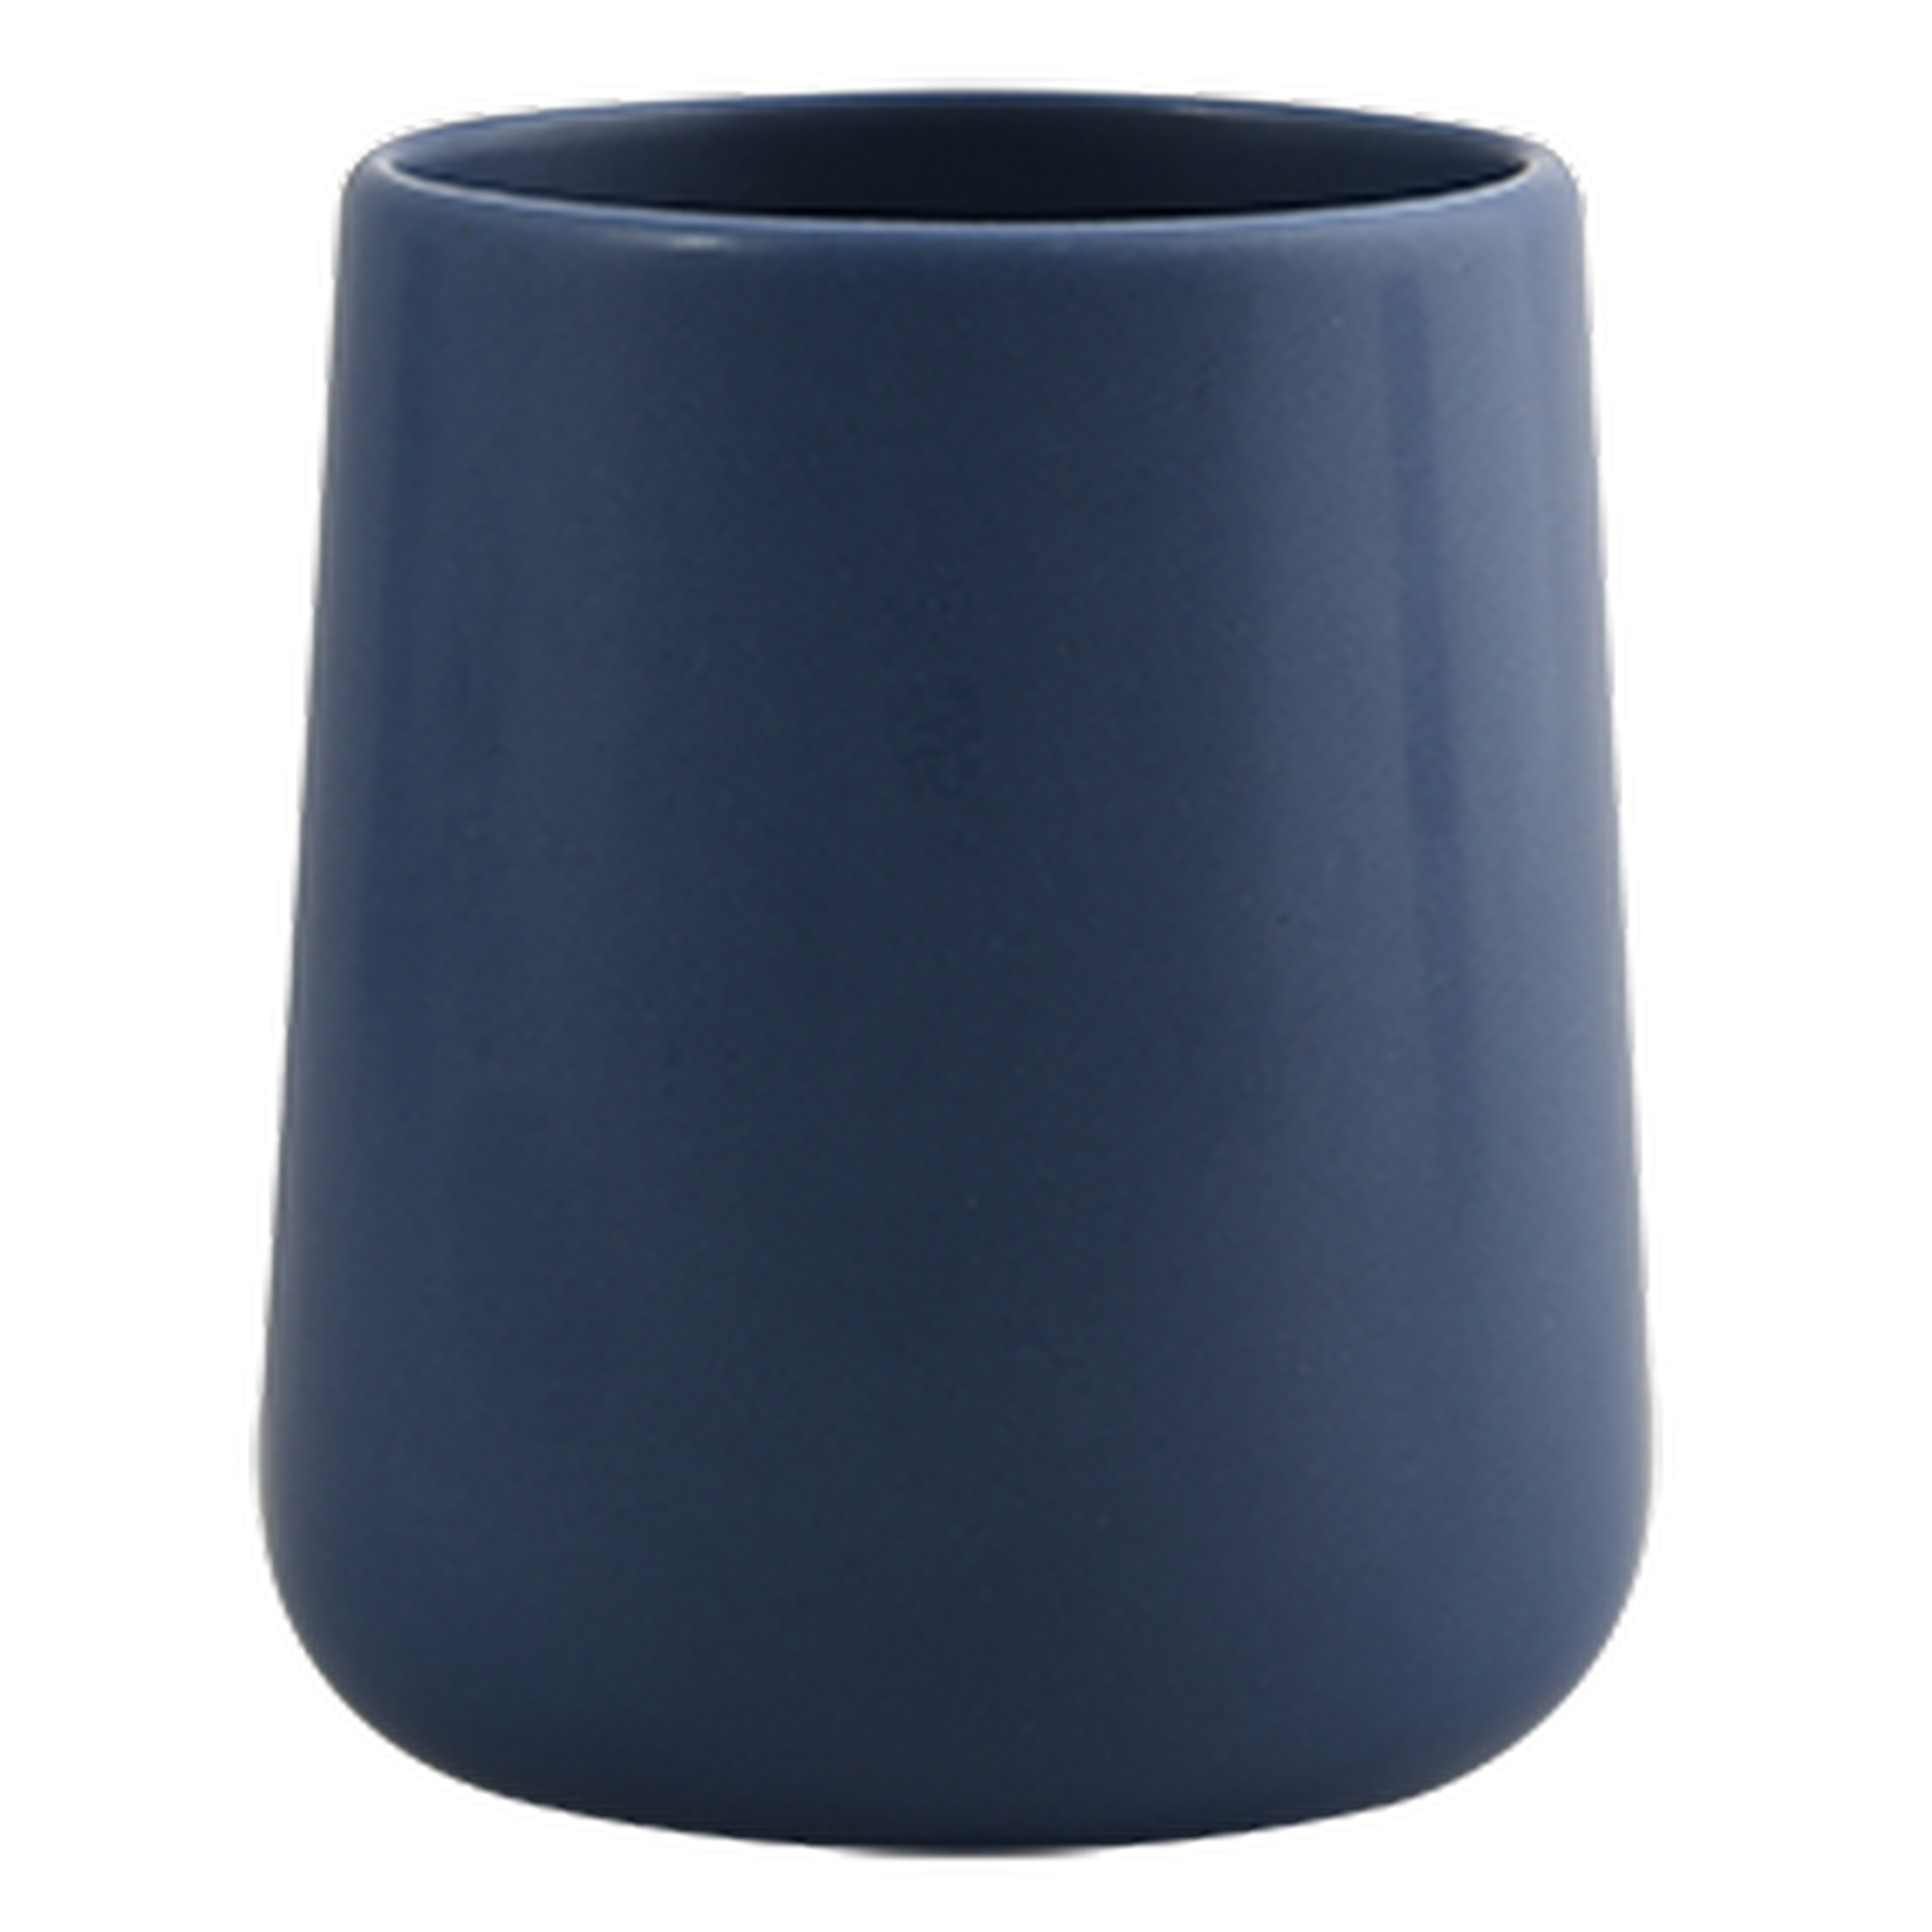 Zahnputzbecher 'Maonie' Keramik dunkelblau Ø 8,5 x 10 cm + product picture